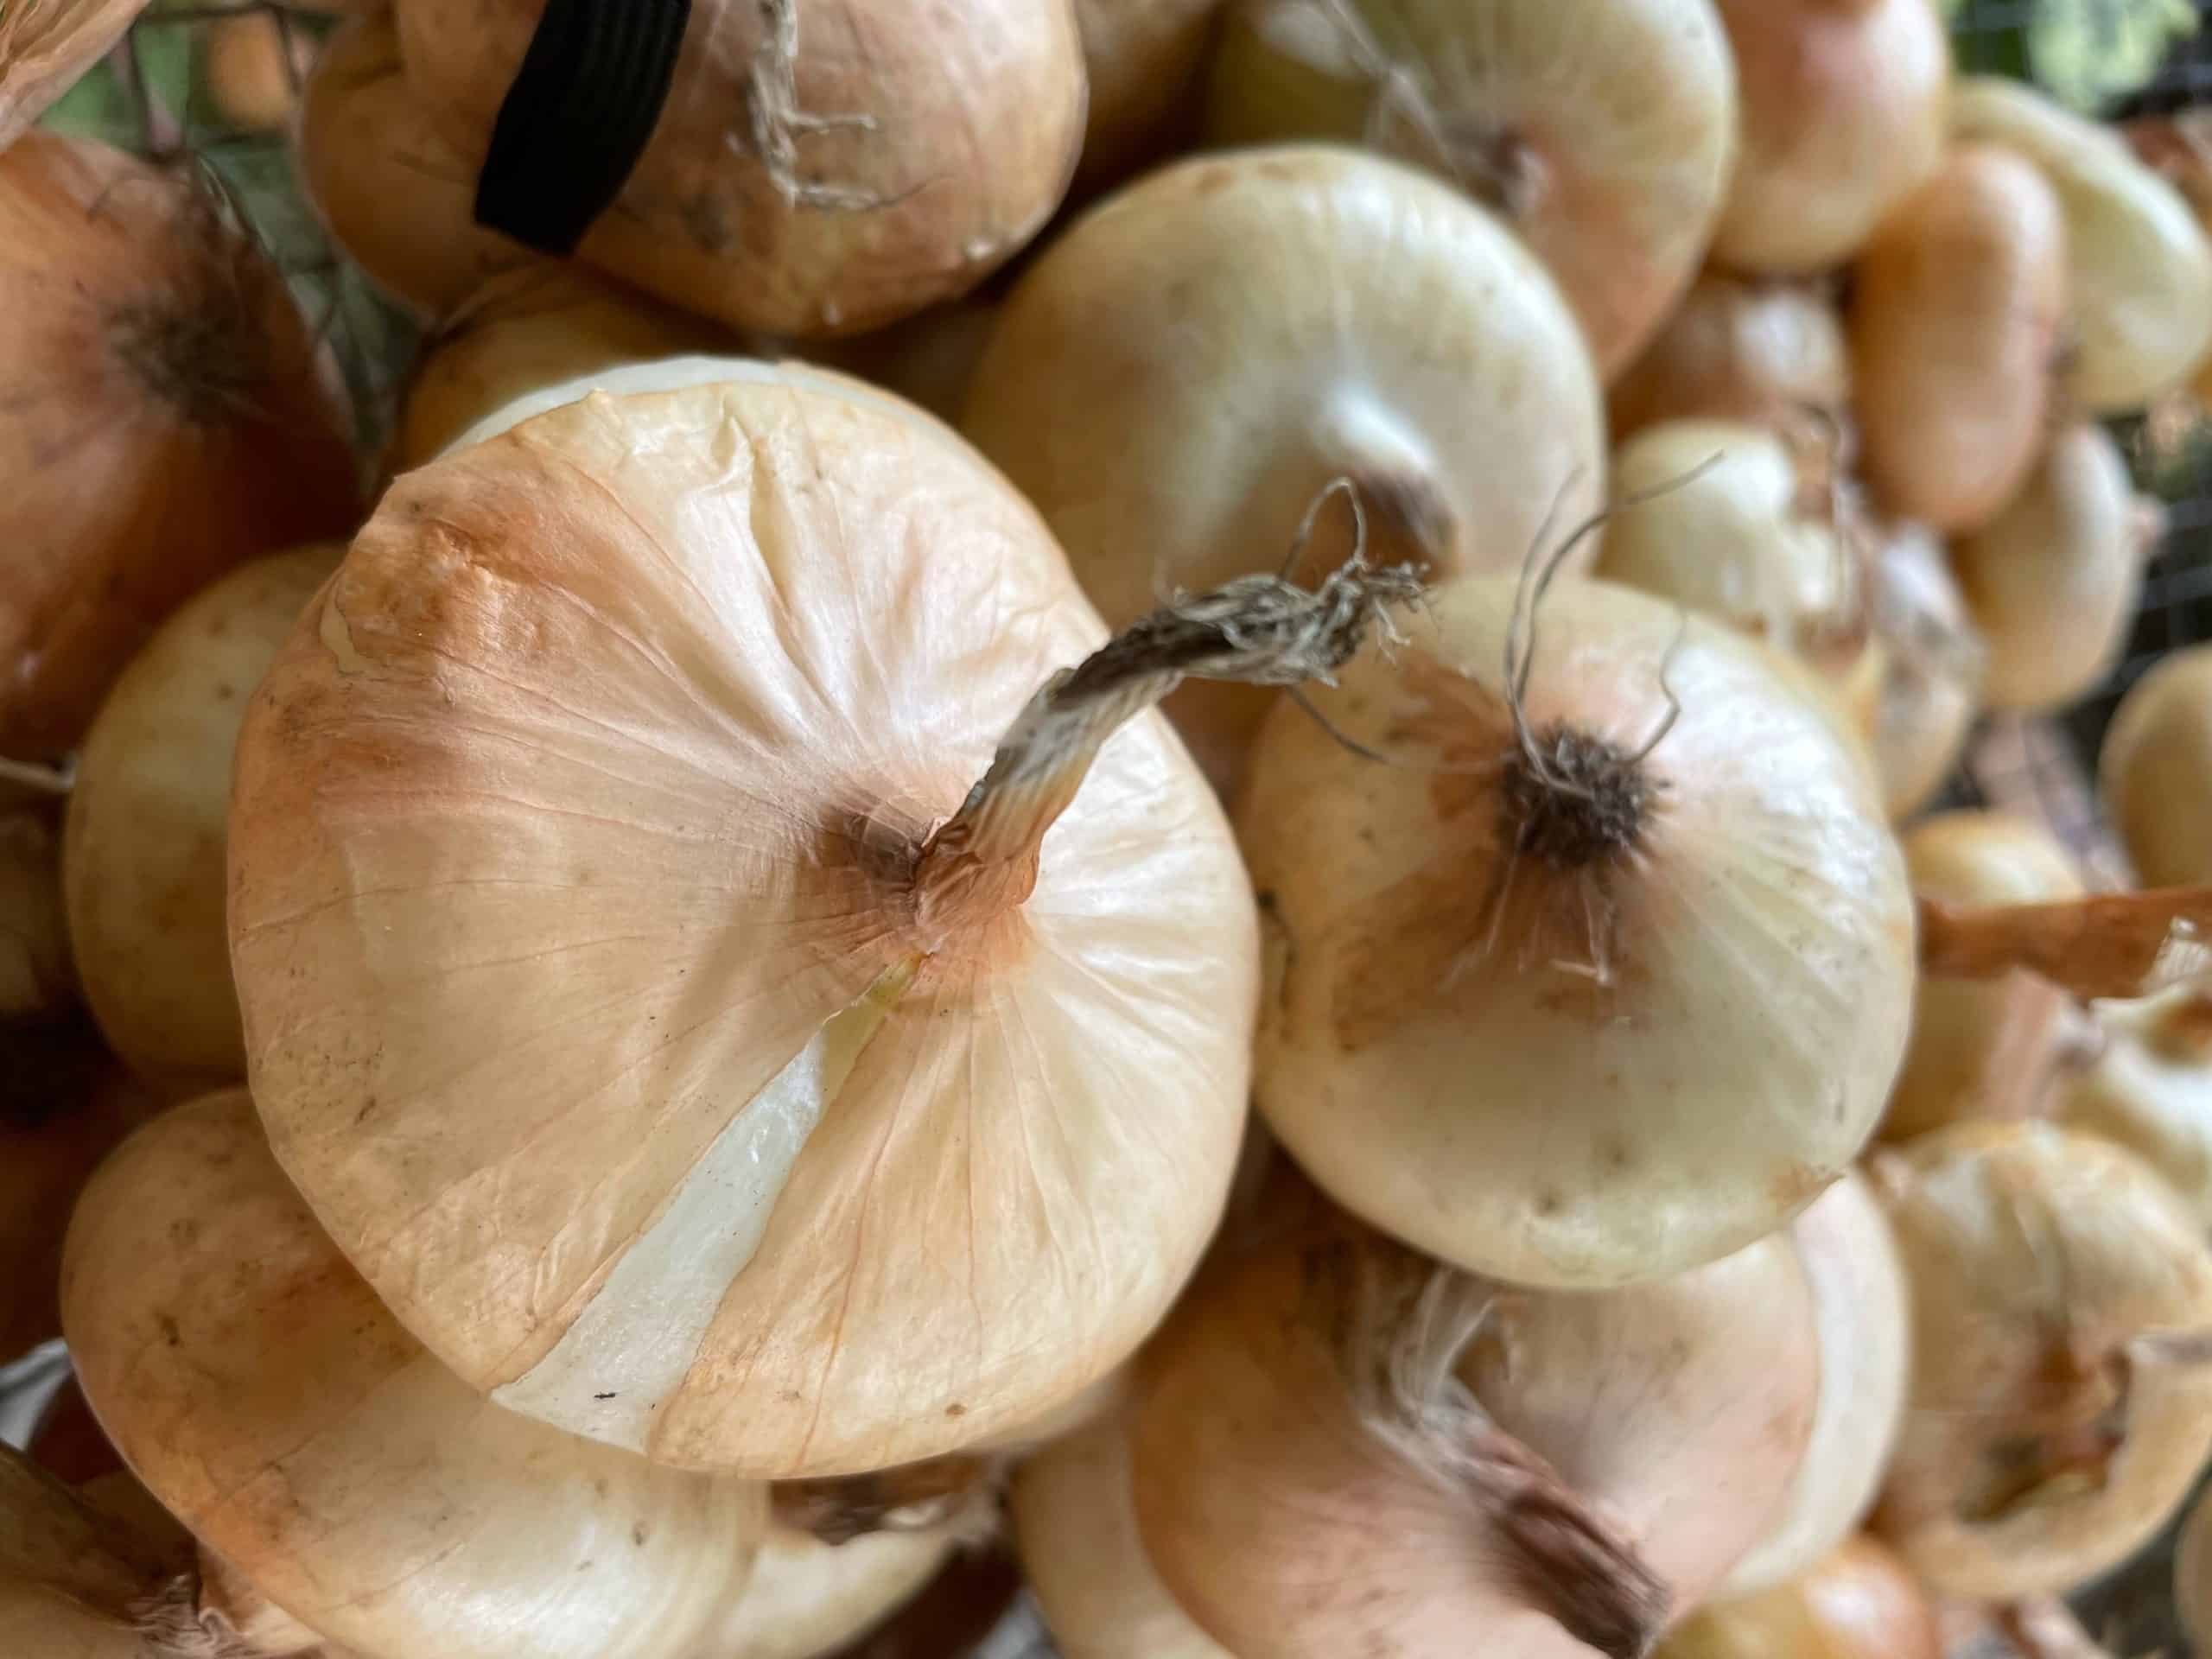 Italian onions